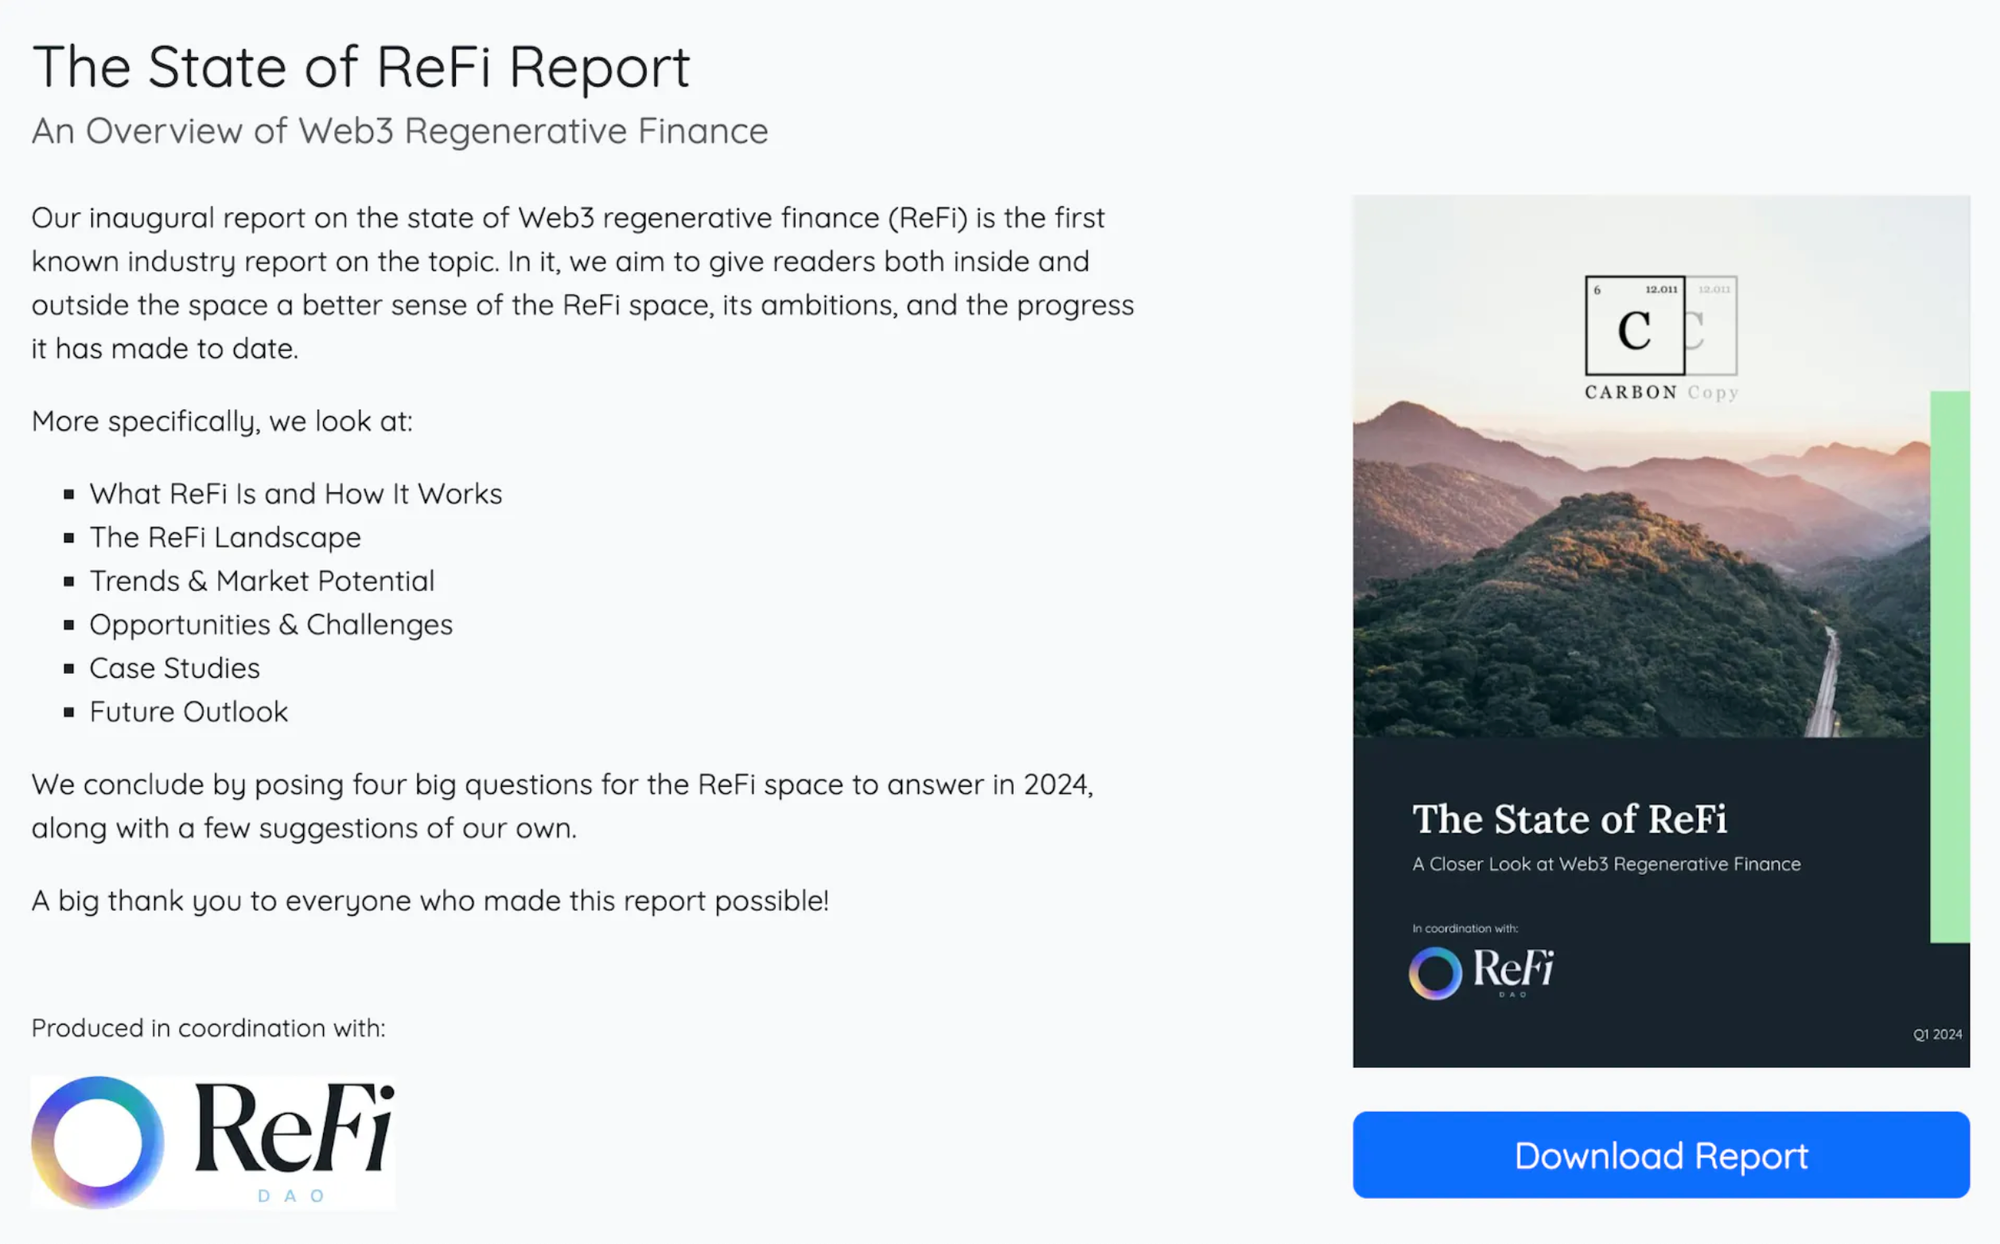 Explore the Future of ReFi with "The State of ReFi" 2024 Report Breakdown